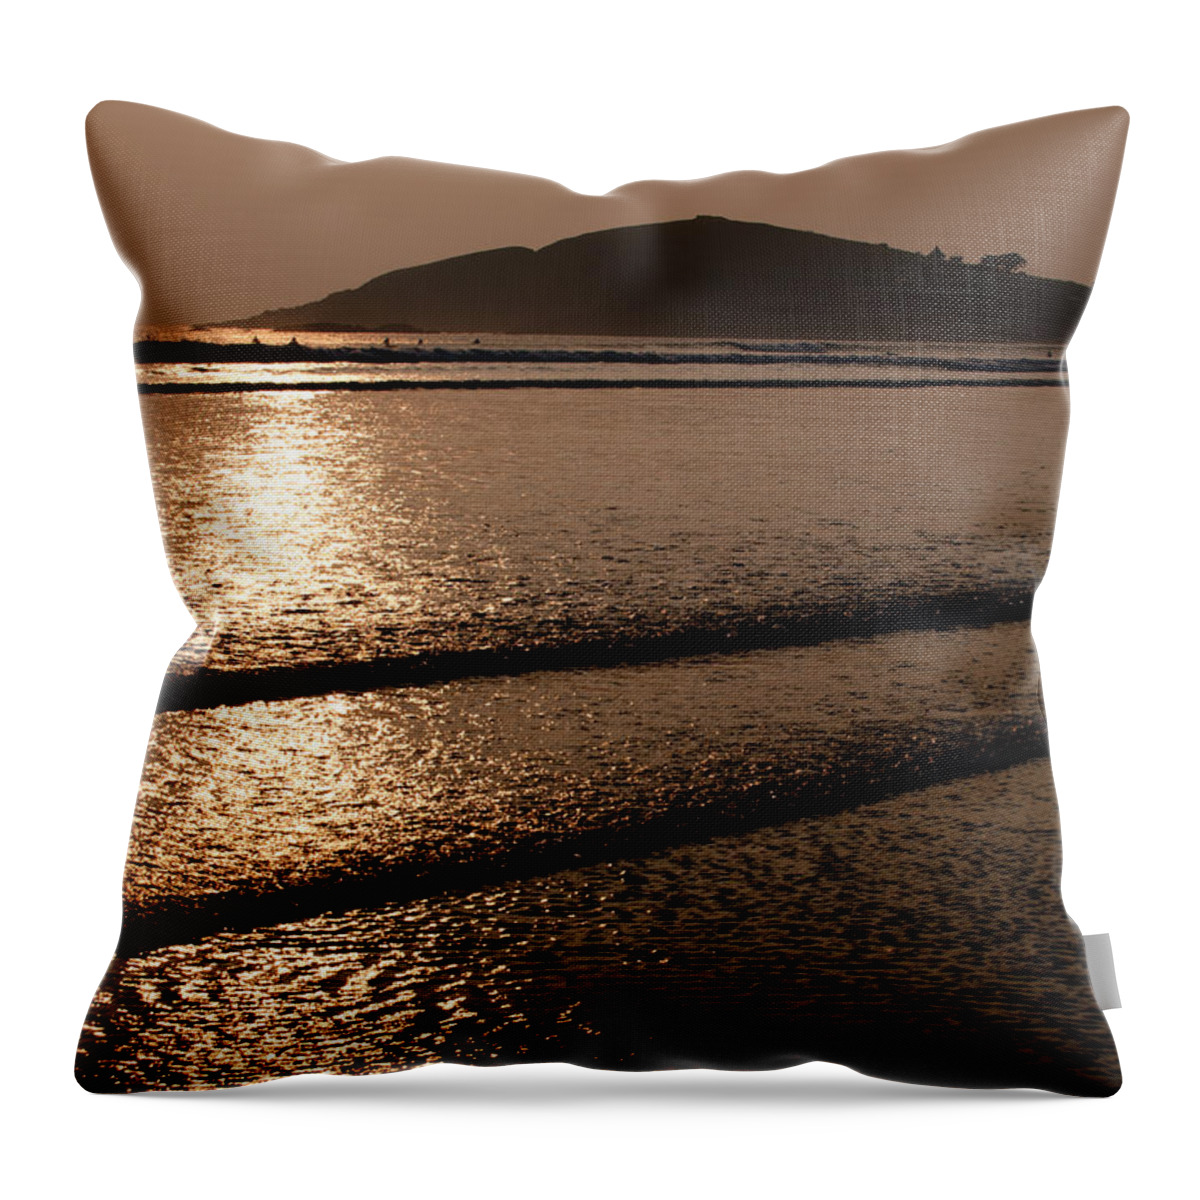 Burgh Island Sunset Throw Pillow featuring the photograph Burgh Island Sunset by Helen Jackson